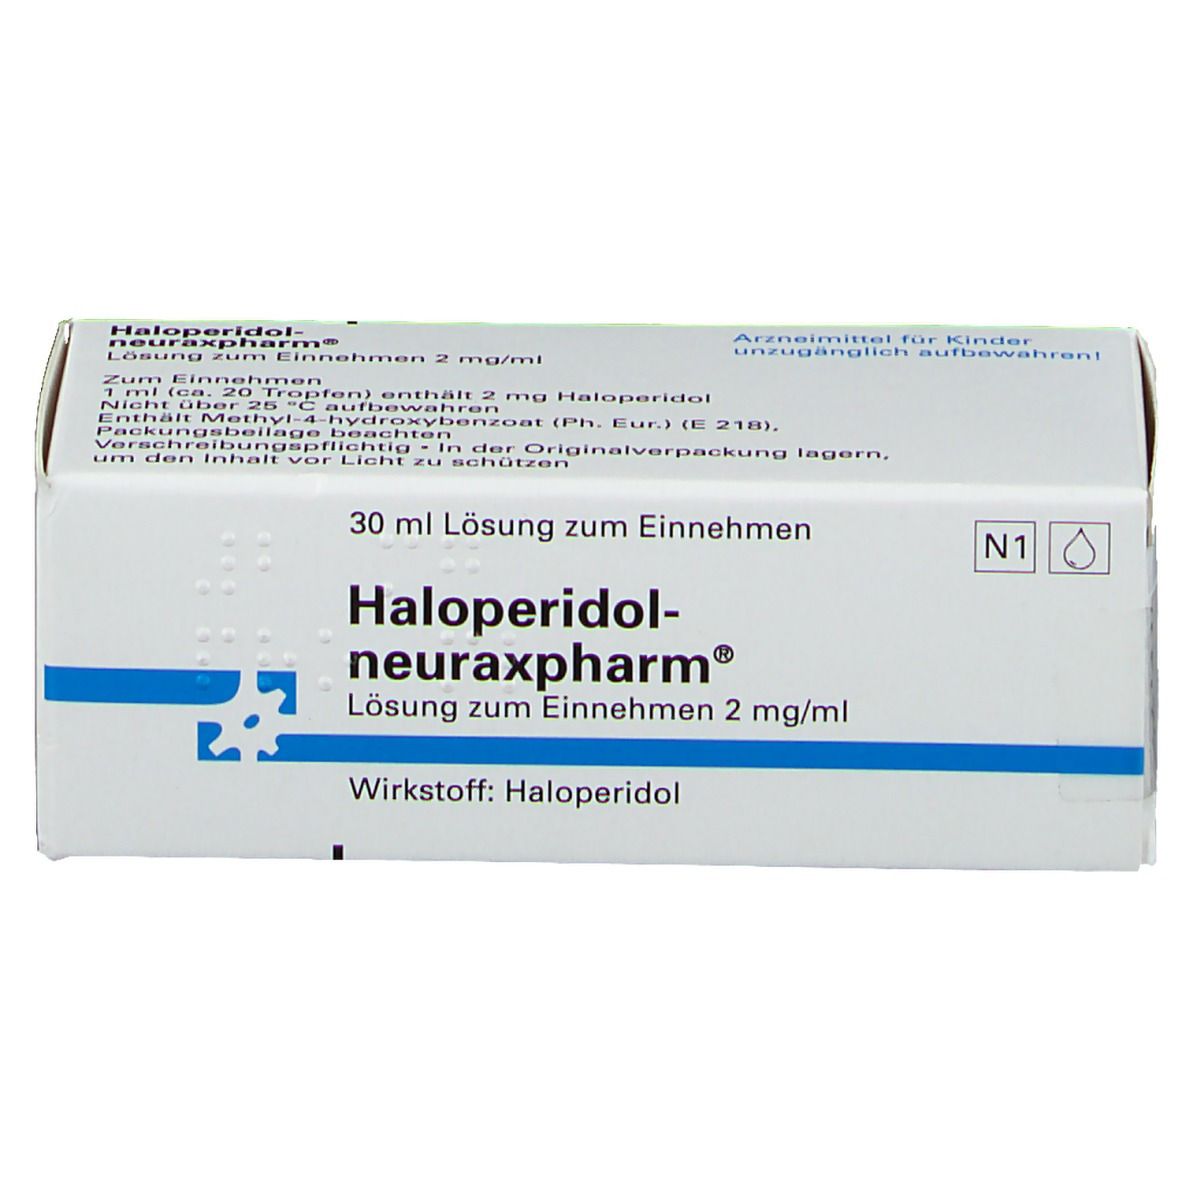 Haloperidol-neuraxpharm® 2 mg/ml